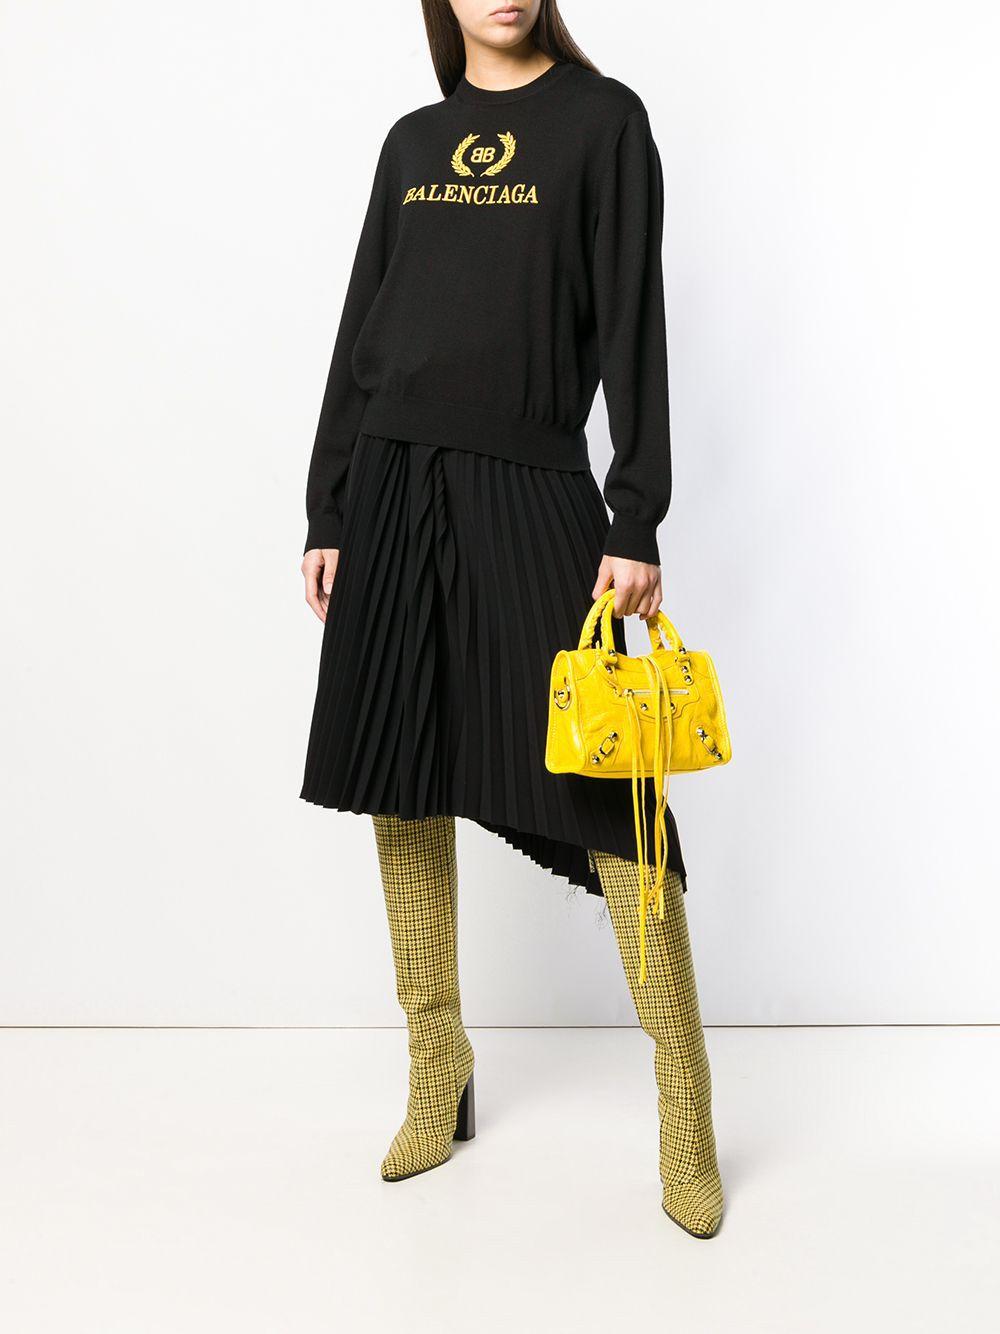 Balenciaga Classic Mini City Bag in Yellow | Lyst